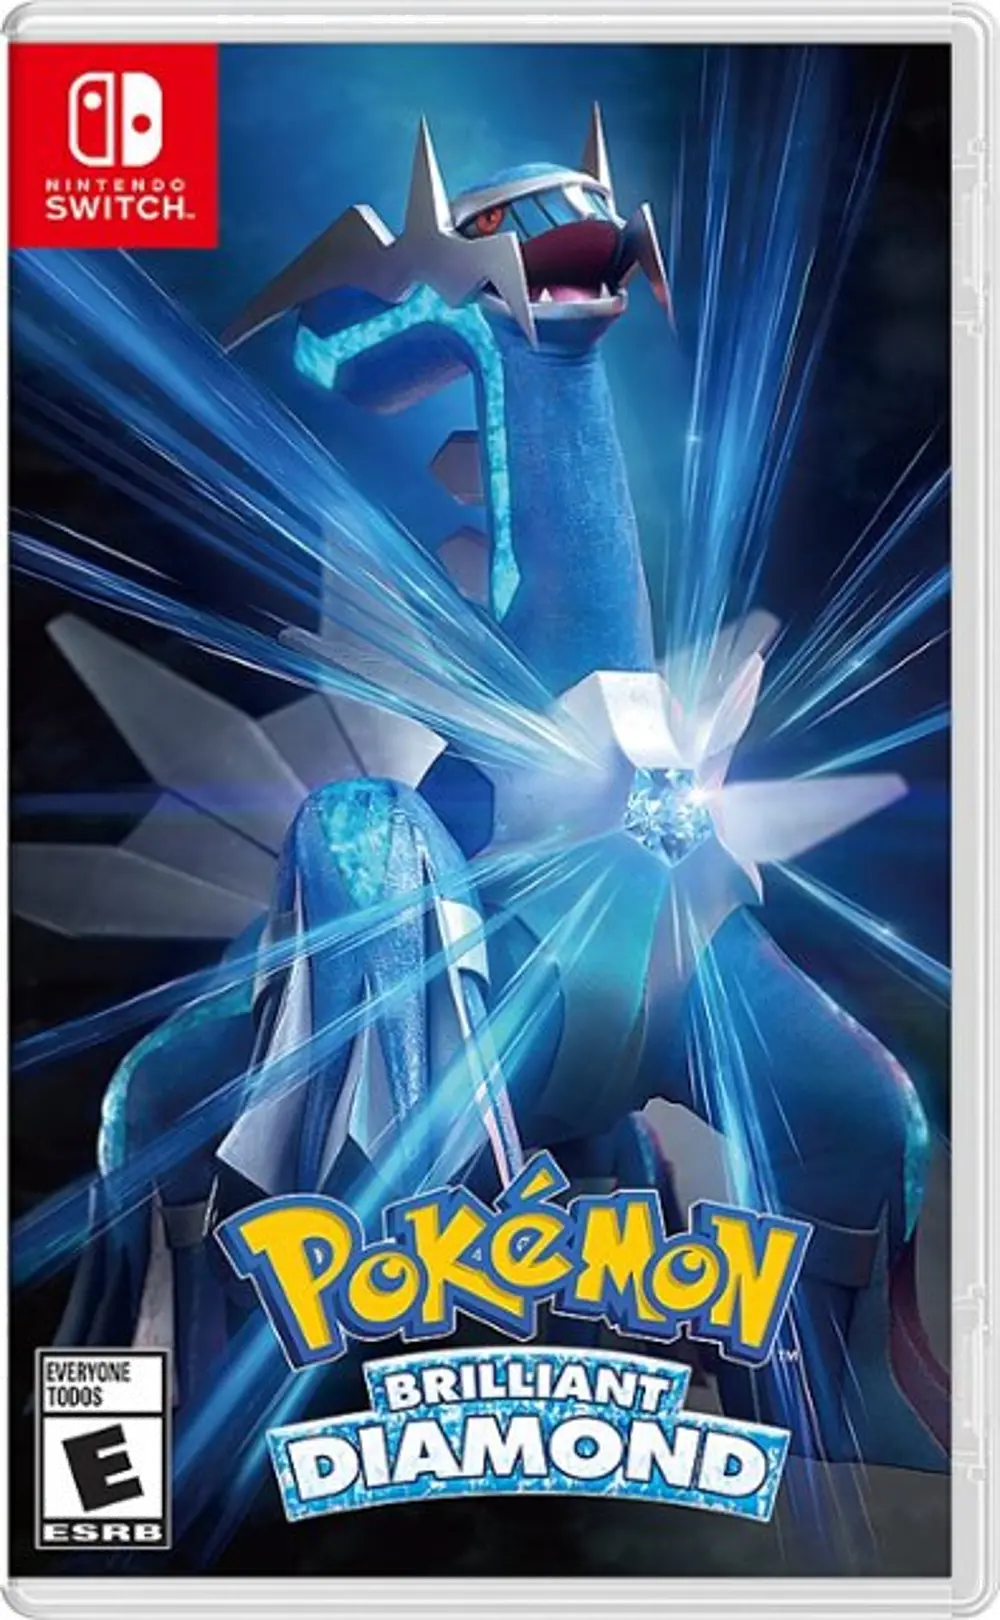 SWI/POKEMON_BDIAMOND Pokémon Brilliant Diamond - Nintendo Switch-1